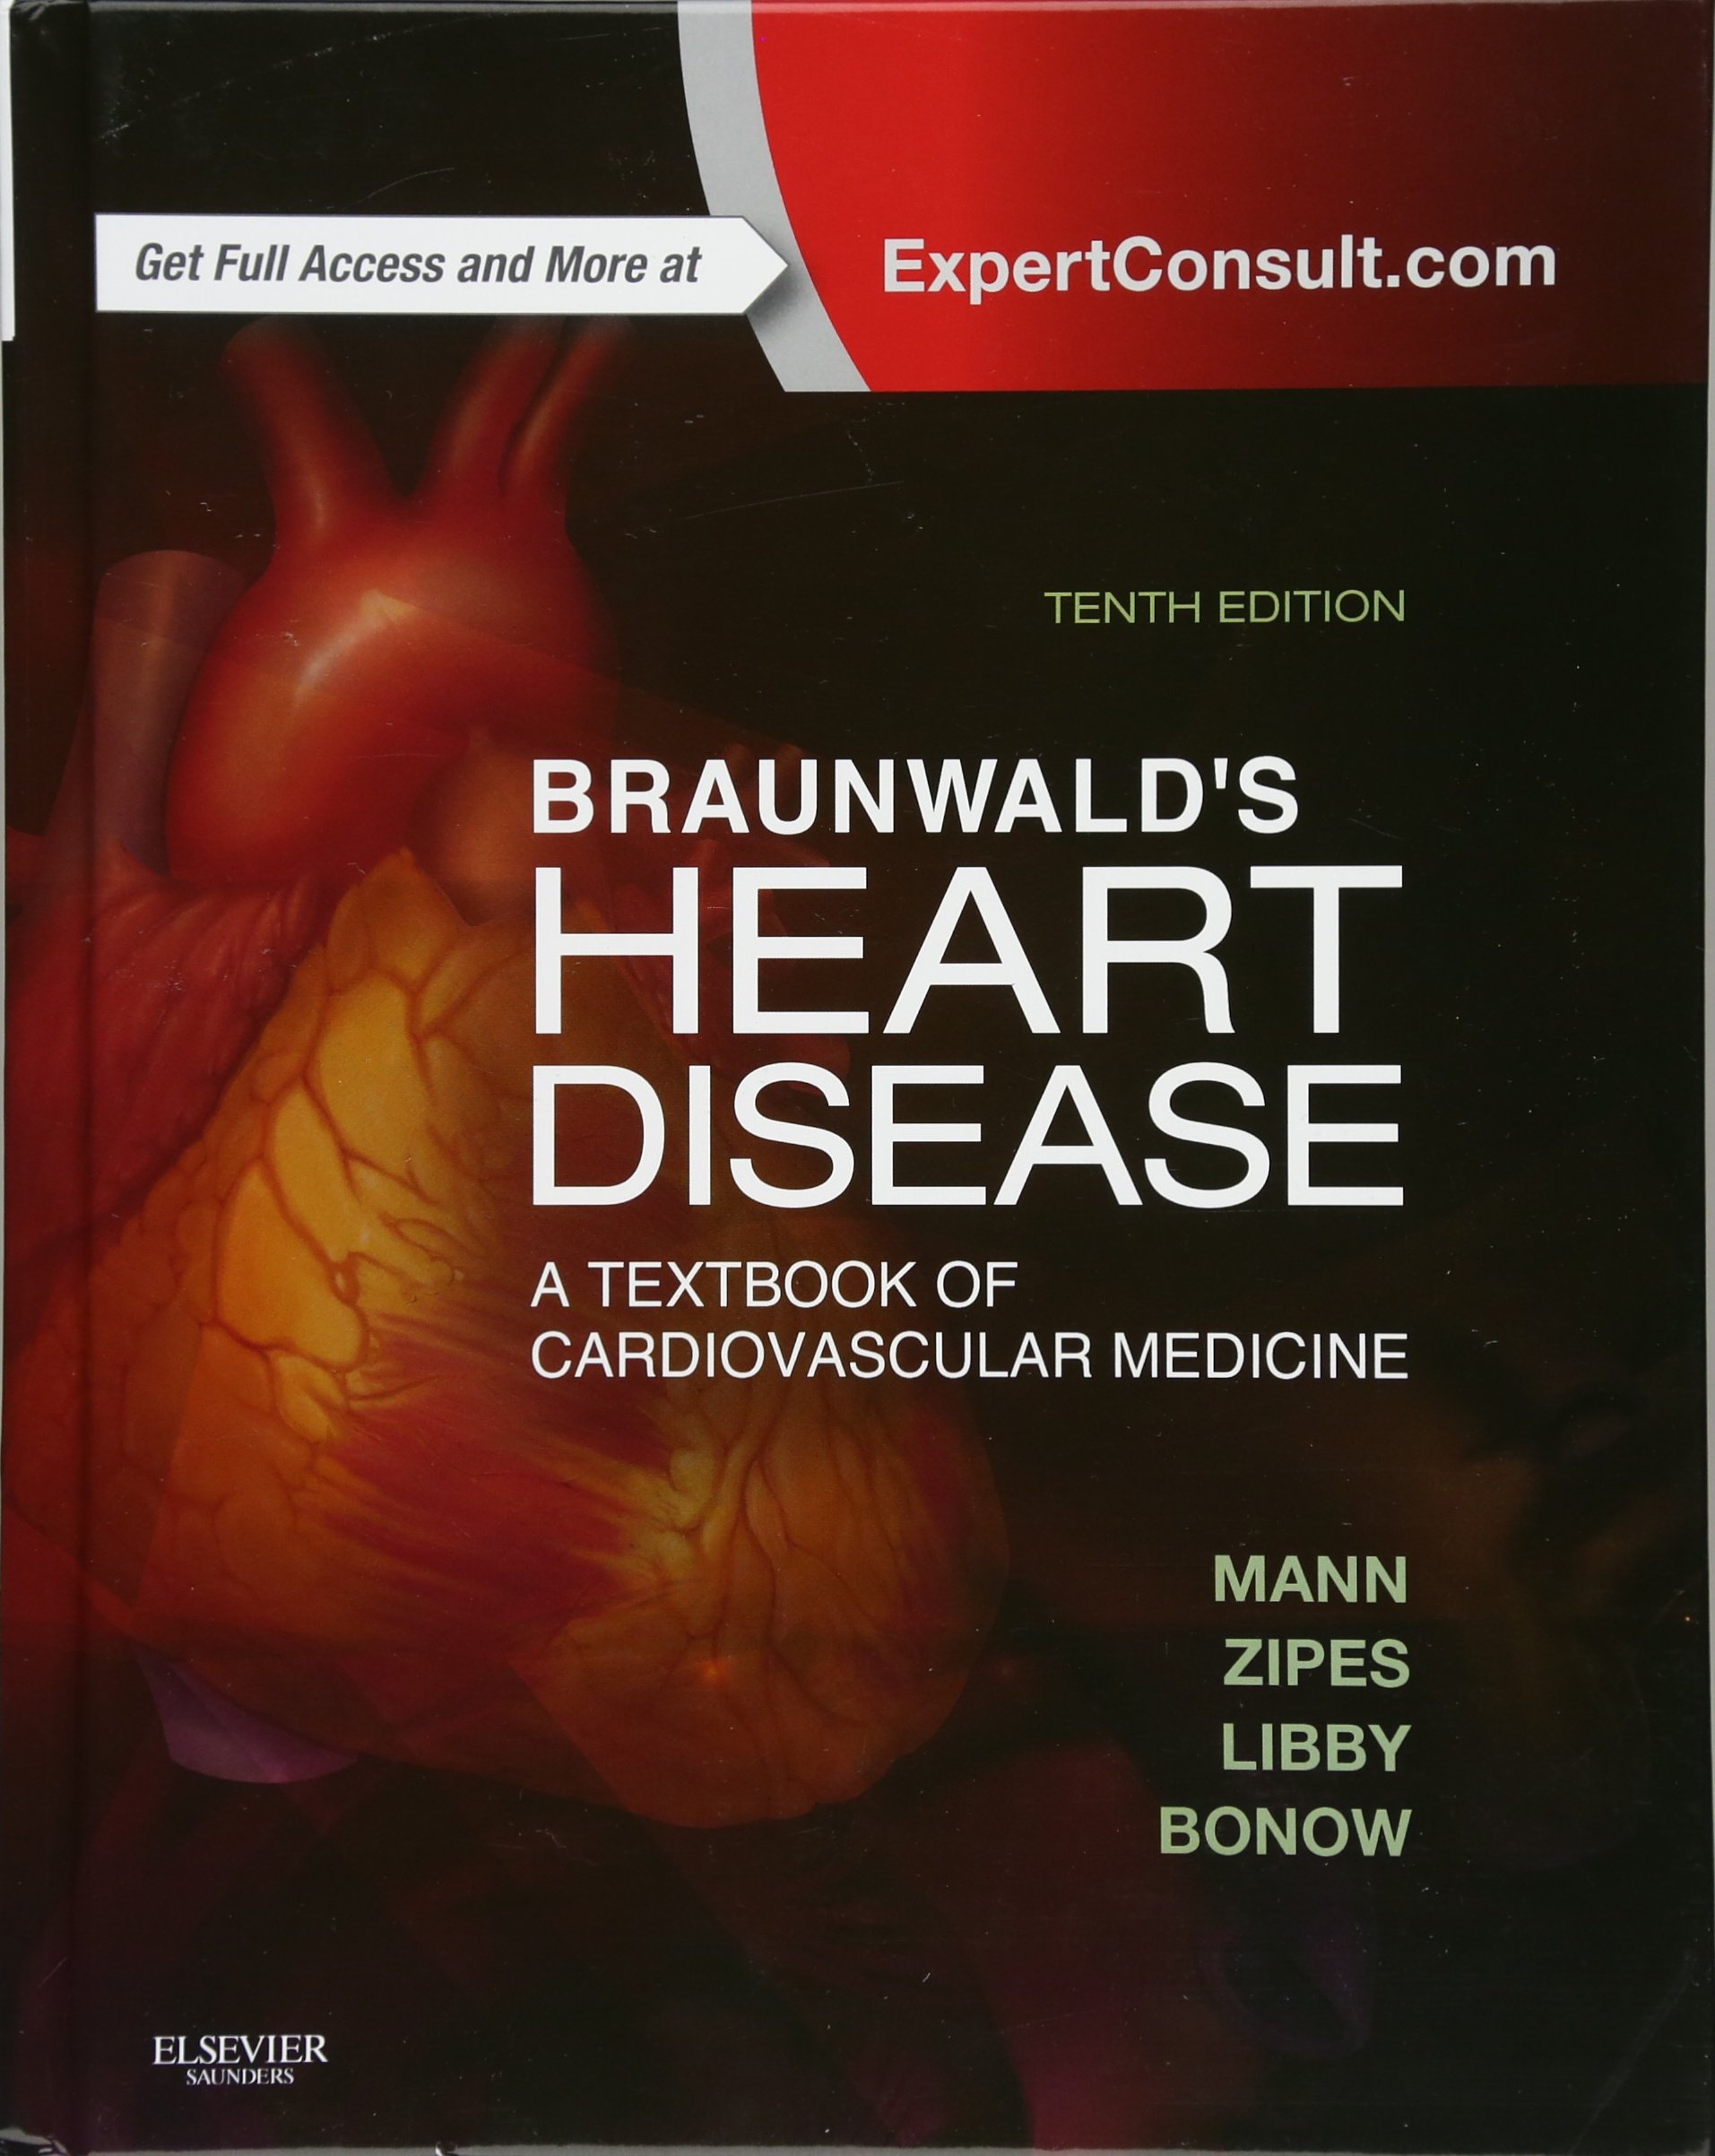 Braunwald's Heart Disease: A Textbook of Cardiovascular Medicine, Single Volume (Heart Disease (Braunwald) (Single Vol))